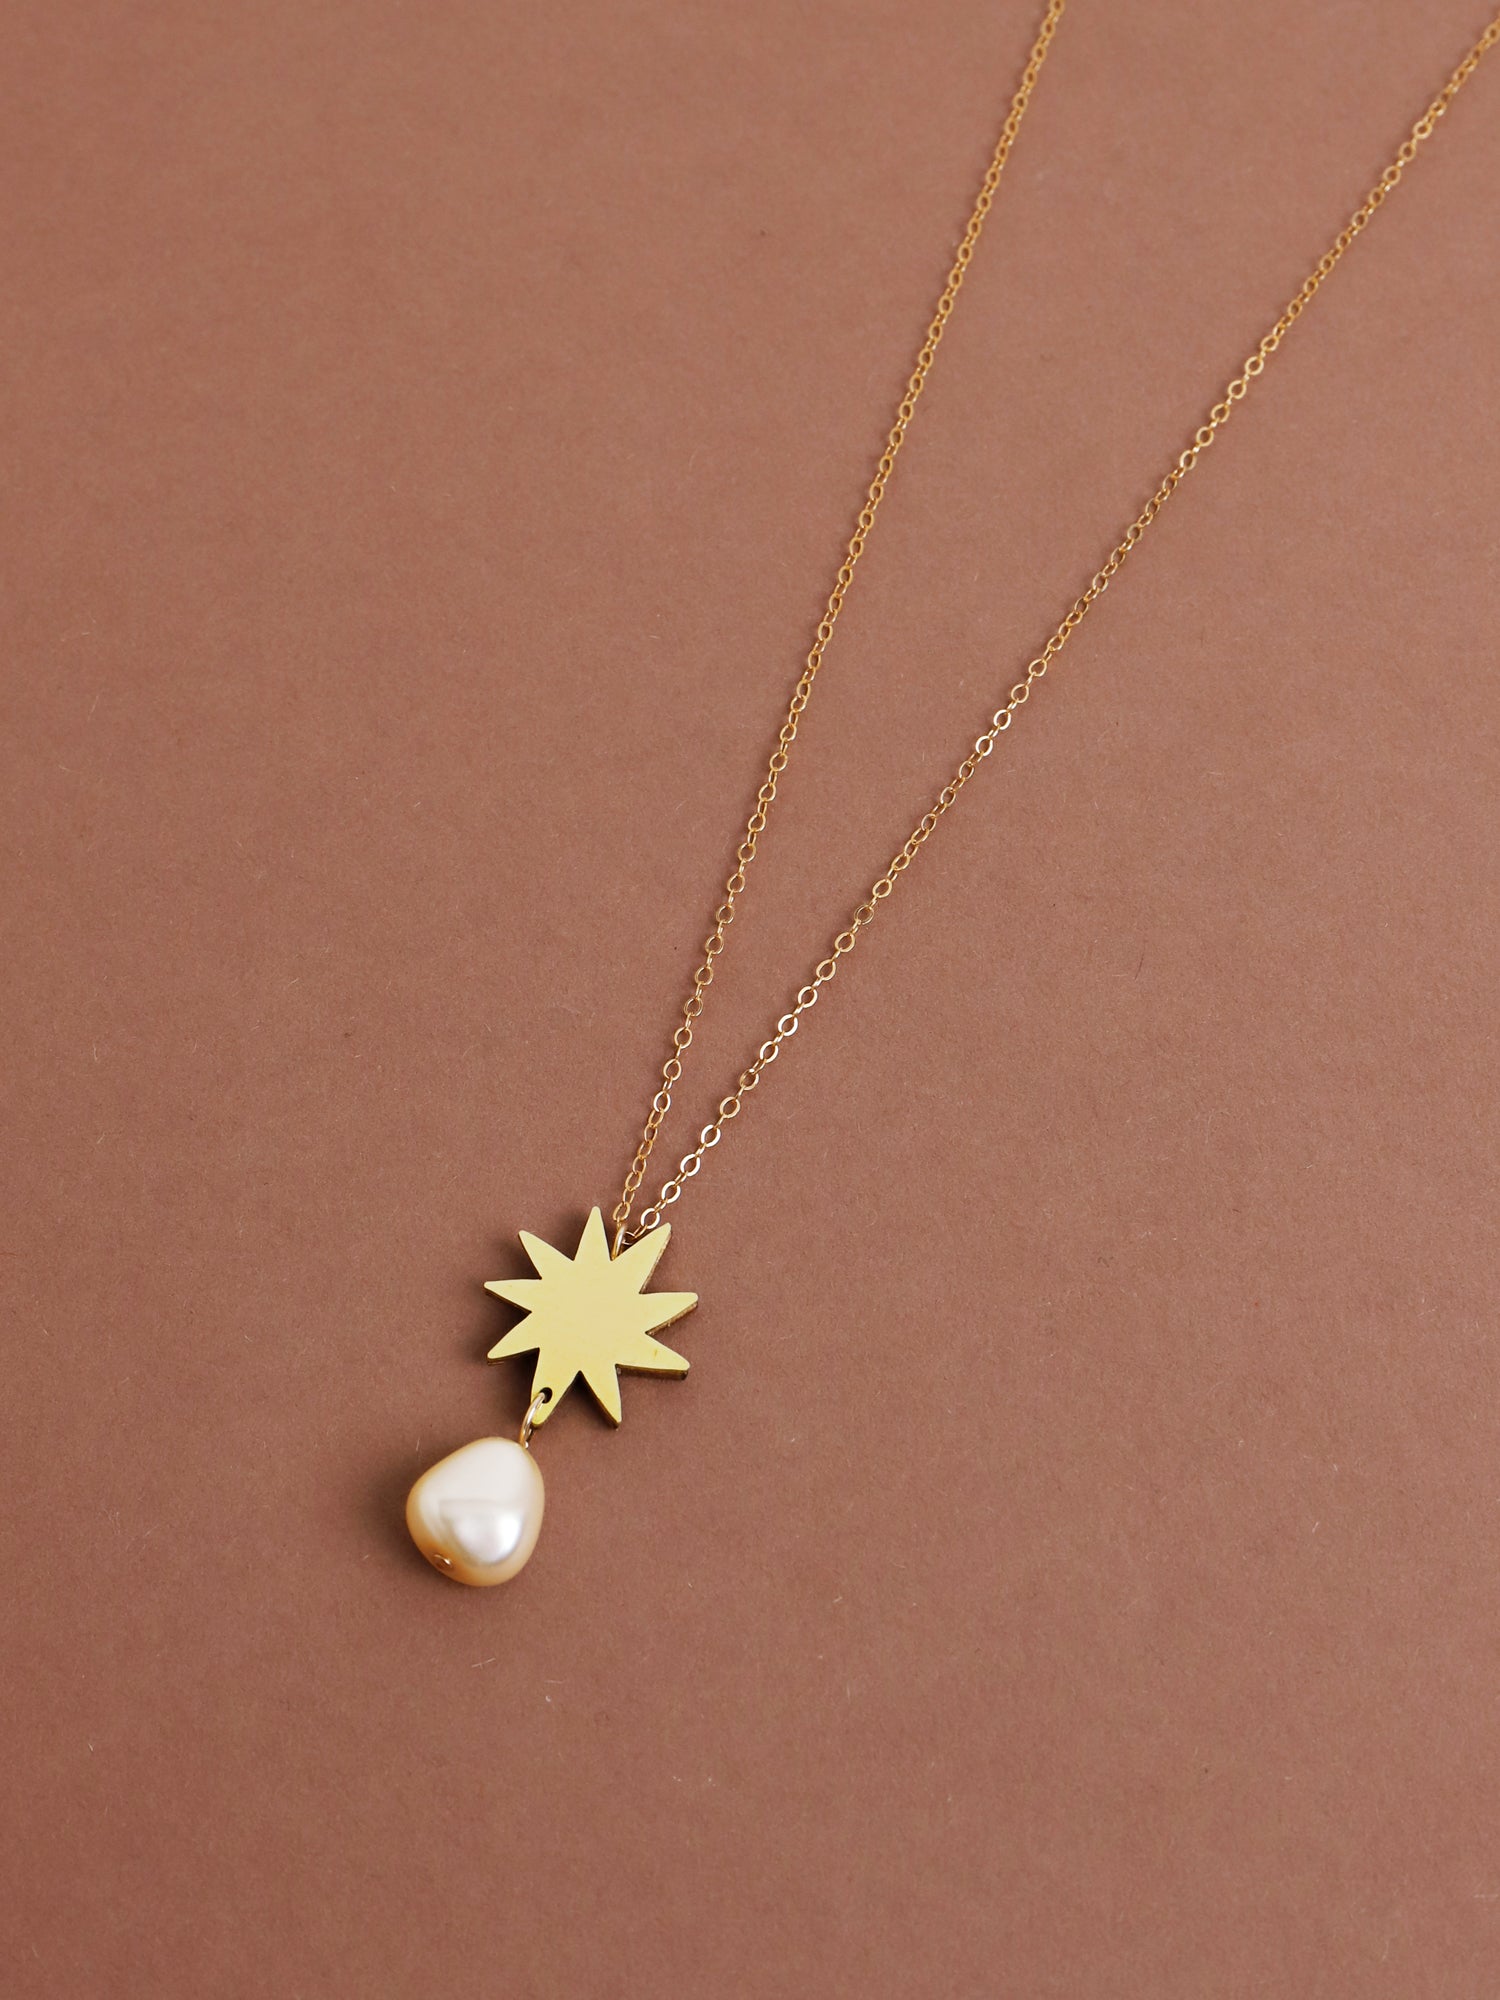  Kara Necklace. Original jewellery handmade in the UK by Wolf & Moon. 